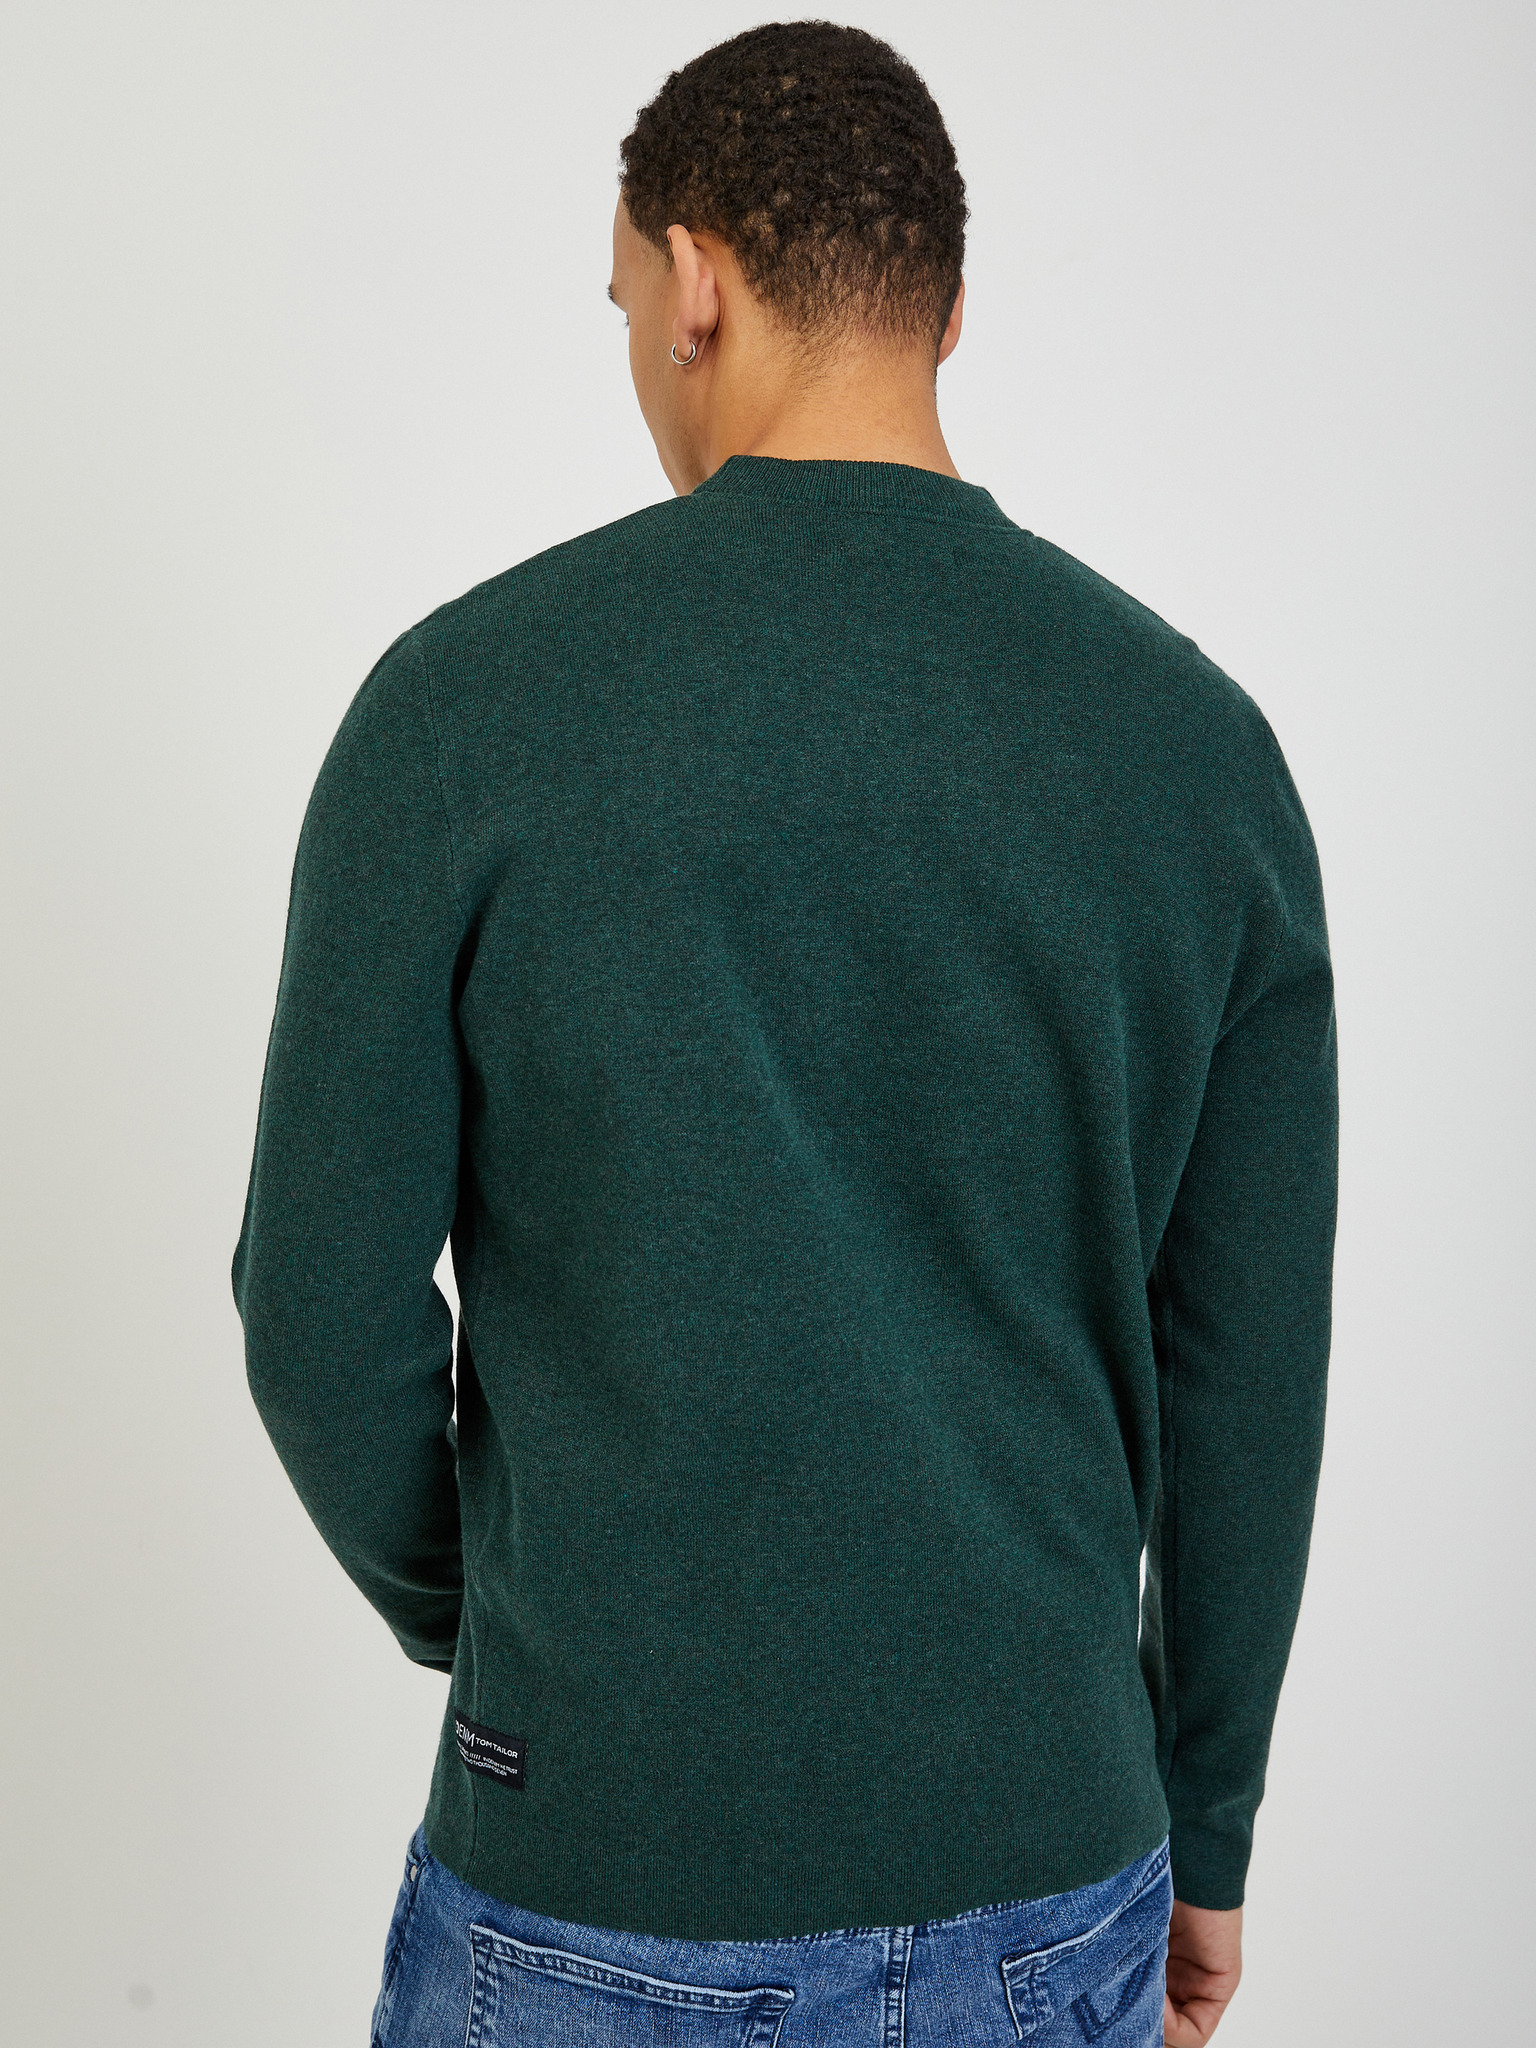 Tom Sweater - Denim Tailor